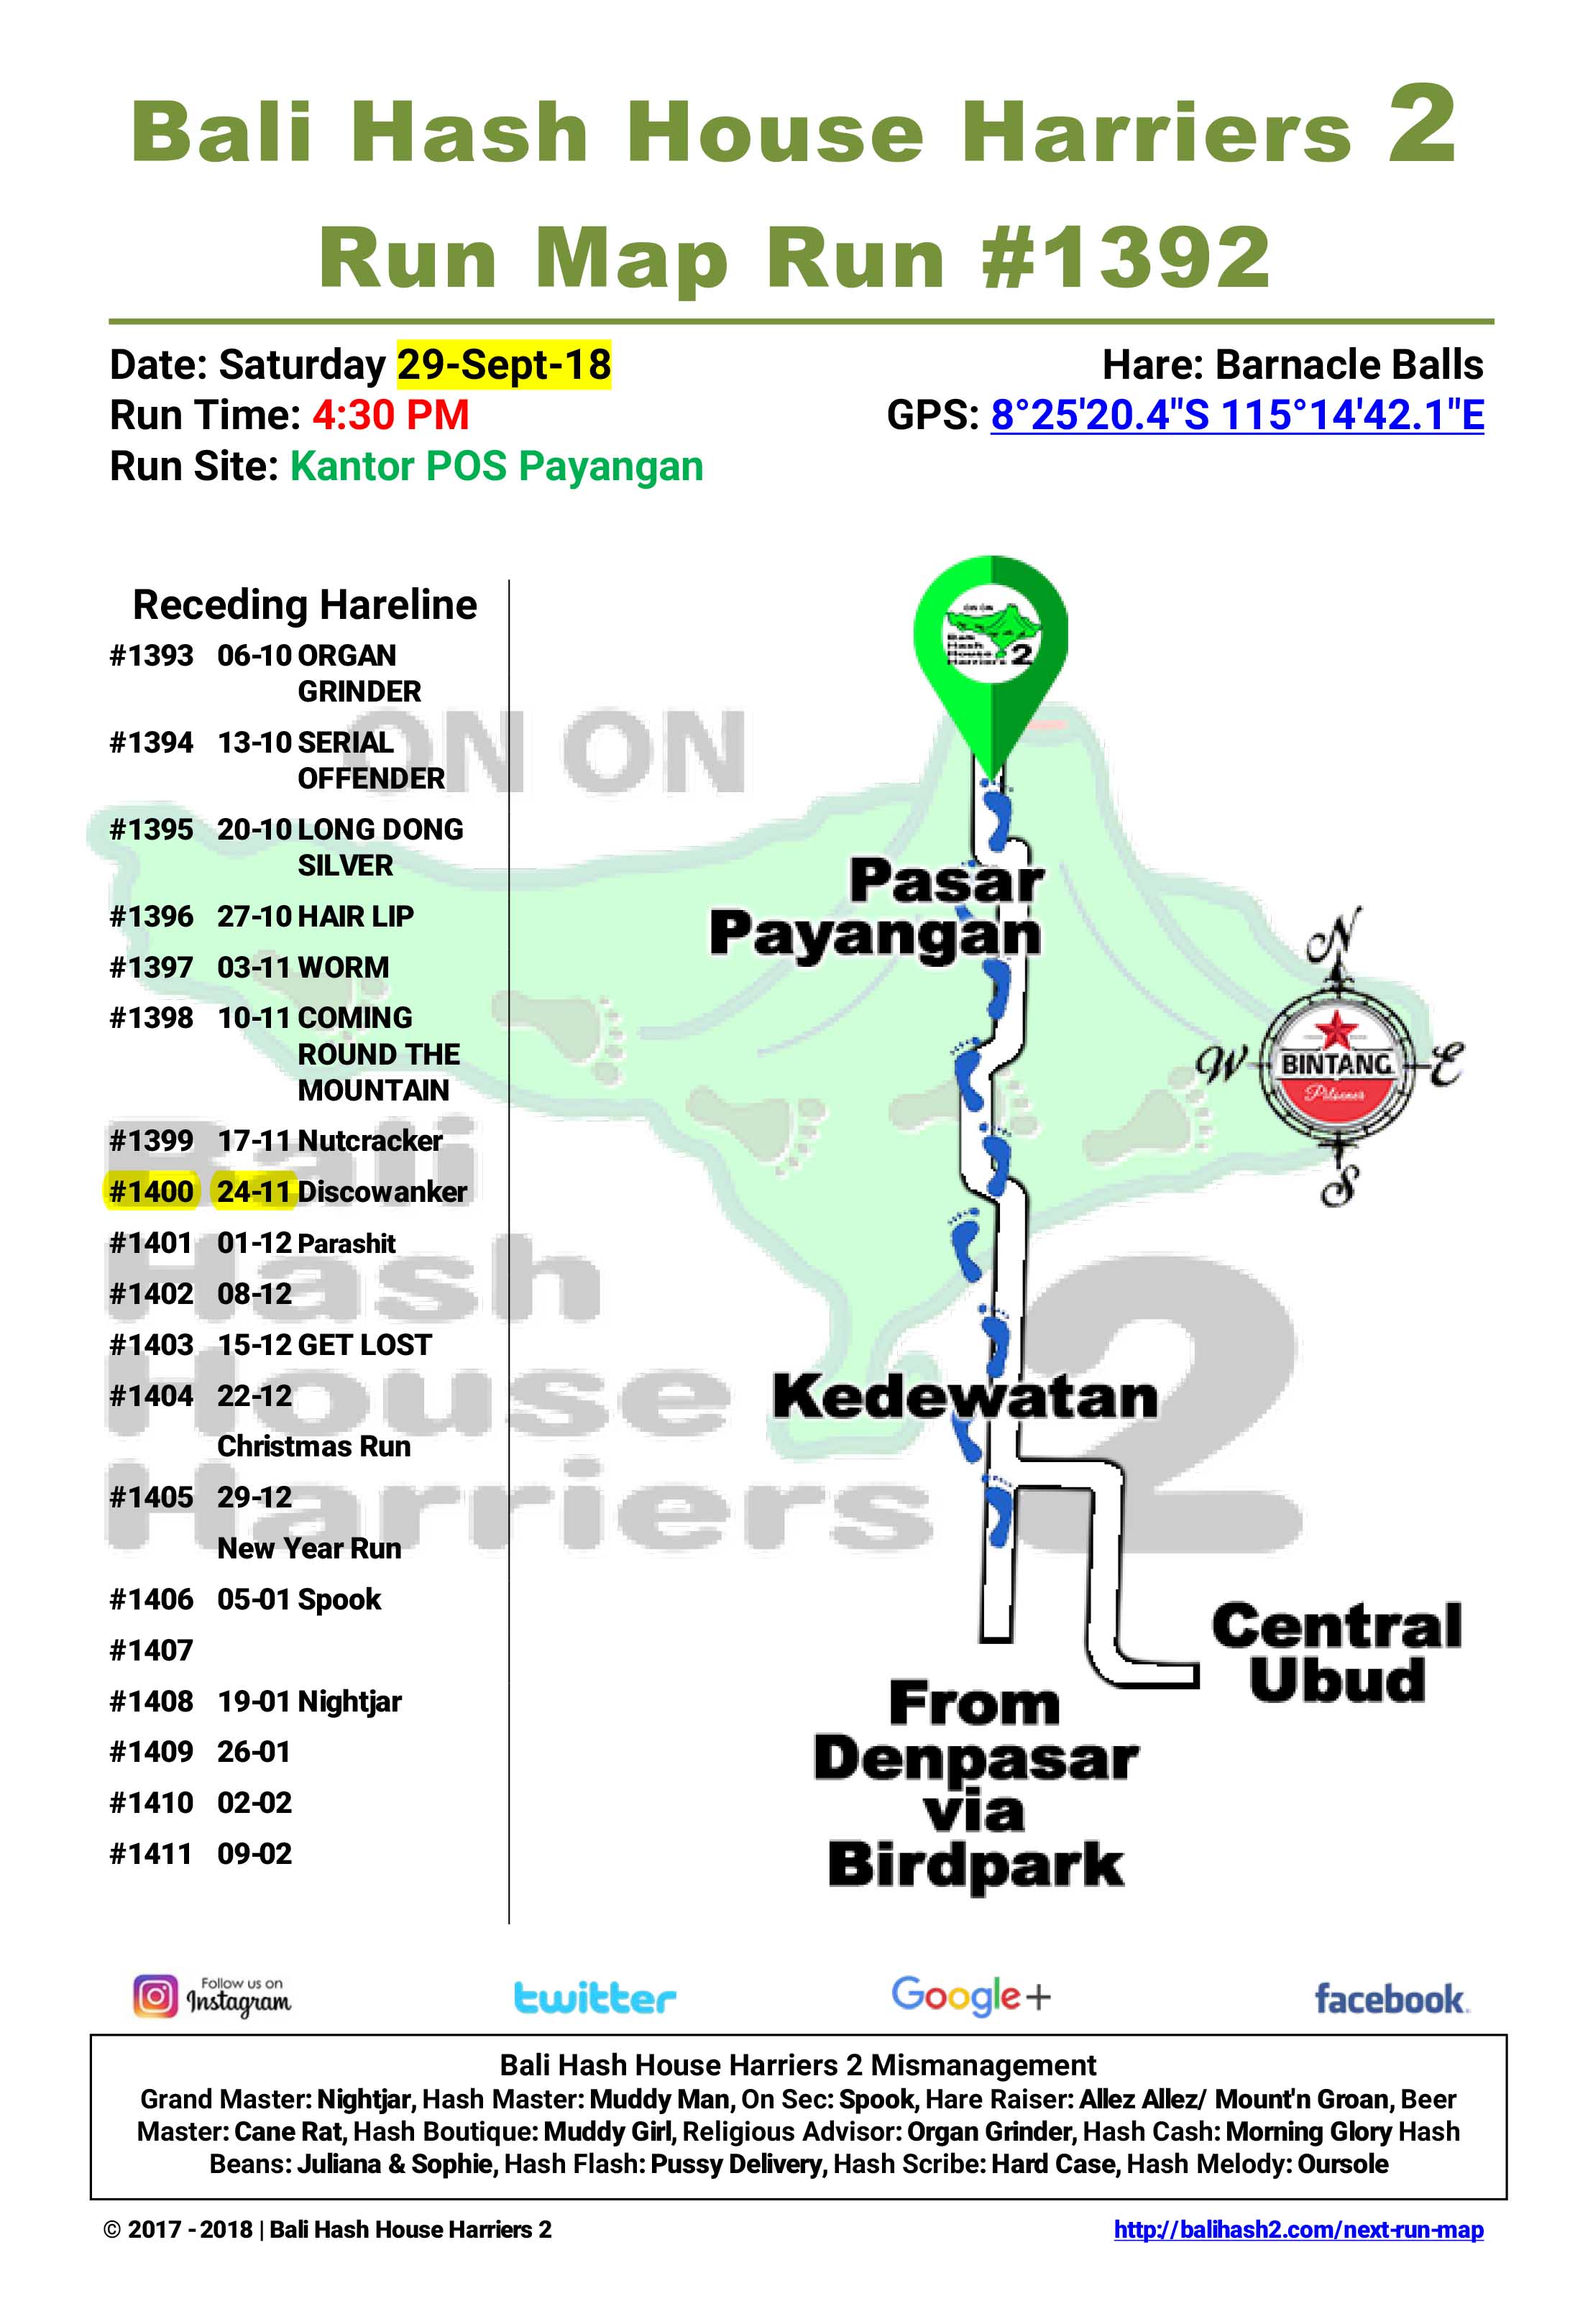 Bali Hash 2 BHHH2 Run Map Run #1392 Payangan 29-Sep-18